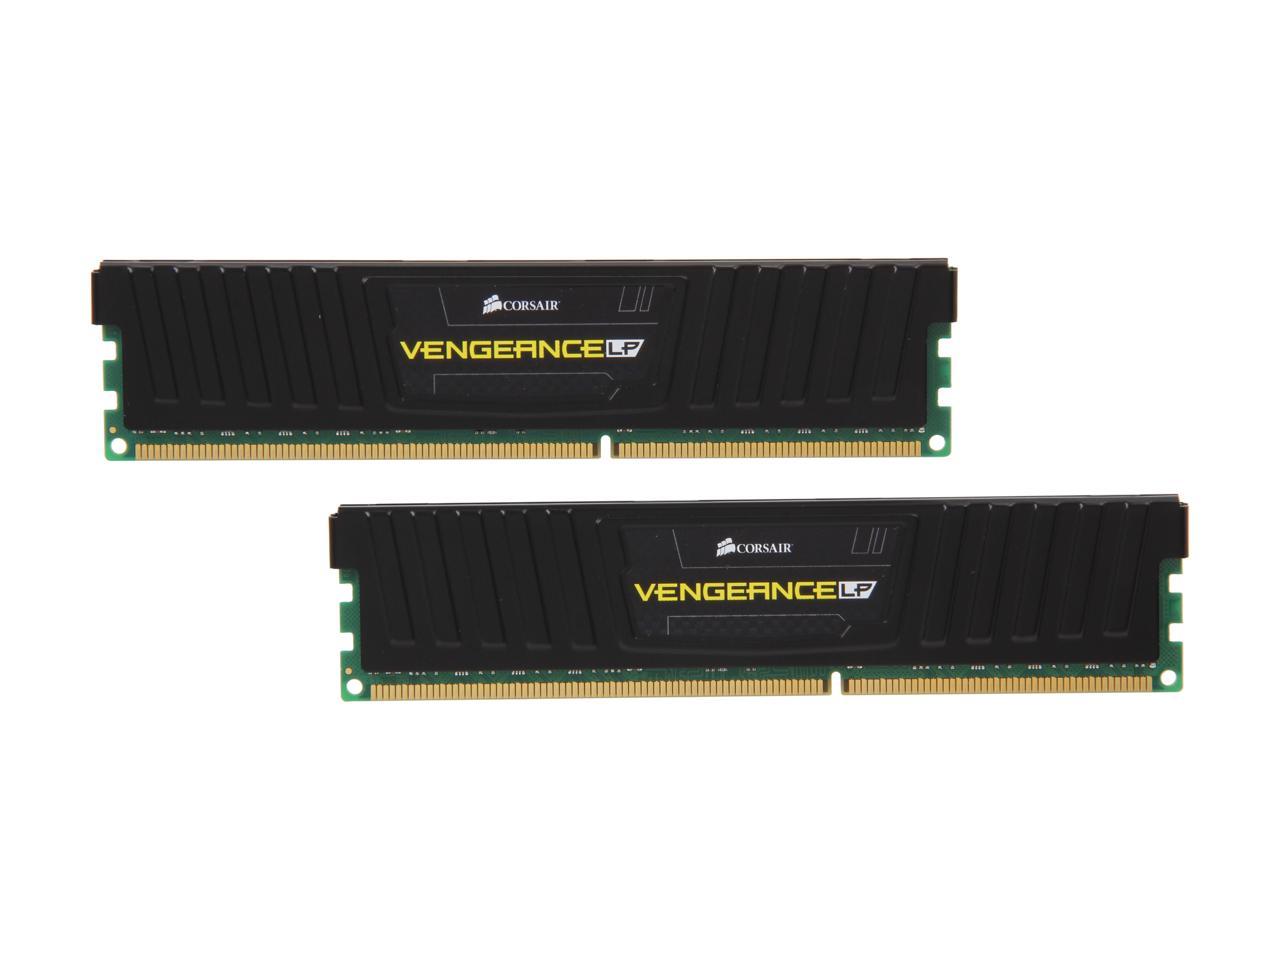 CORSAIR Vengeance LP 16GB (2 x 8GB) 240-Pin PC RAM DDR3 1600 (PC3 12800)  Desktop Memory Model CML16GX3M2A1600C10